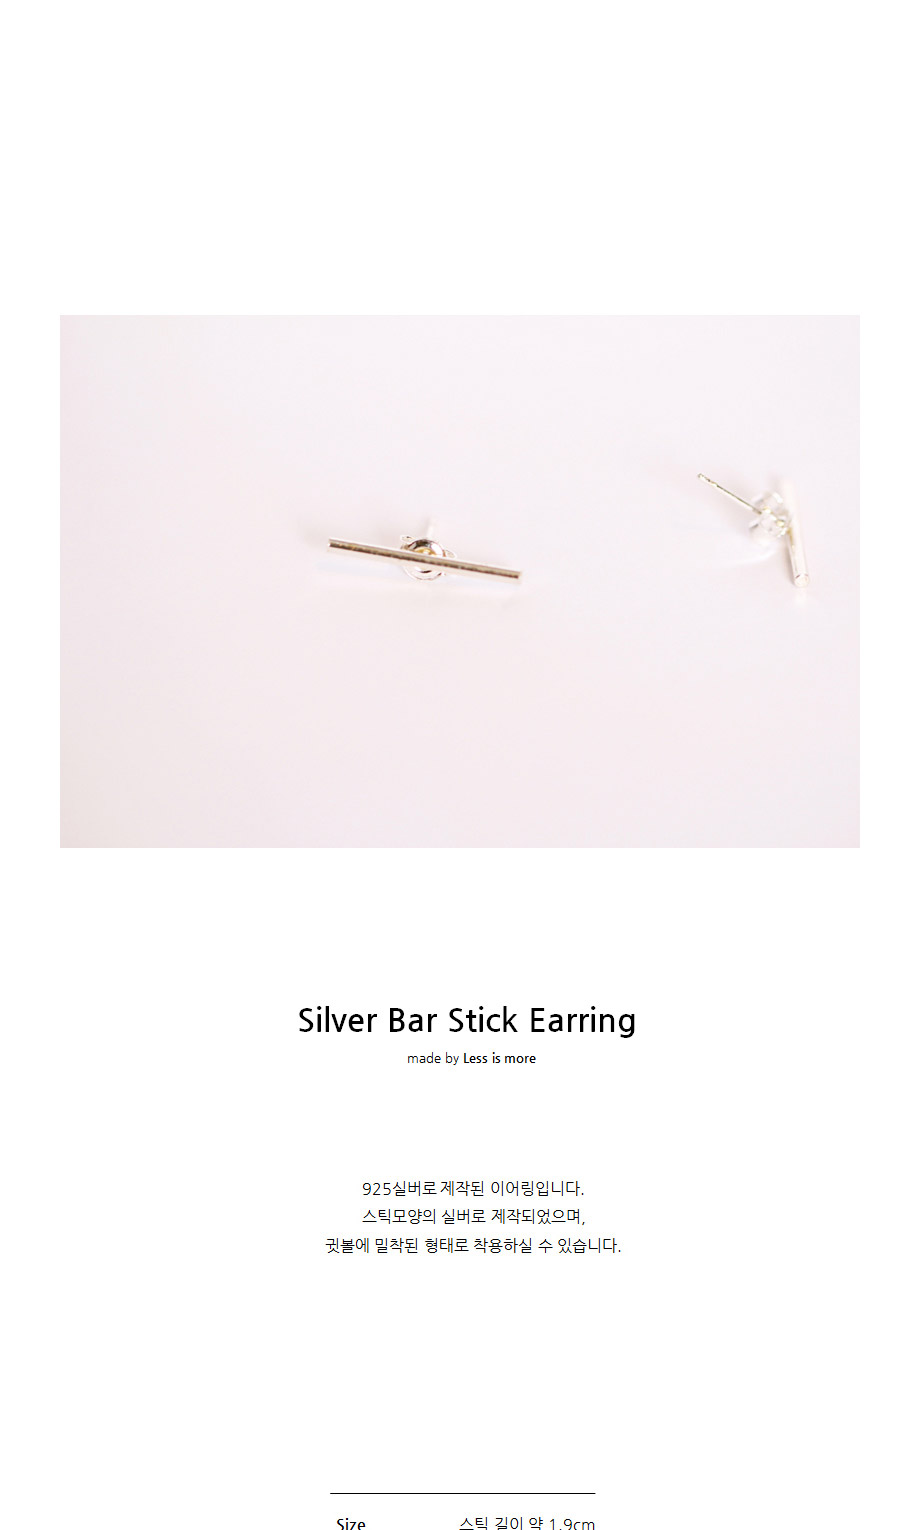 silver bar earring 19,000원 - 레스이즈모어 이동요망, X주얼리/시계, 귀걸이, 실버 바보사랑 silver bar earring 19,000원 - 레스이즈모어 이동요망, X주얼리/시계, 귀걸이, 실버 바보사랑